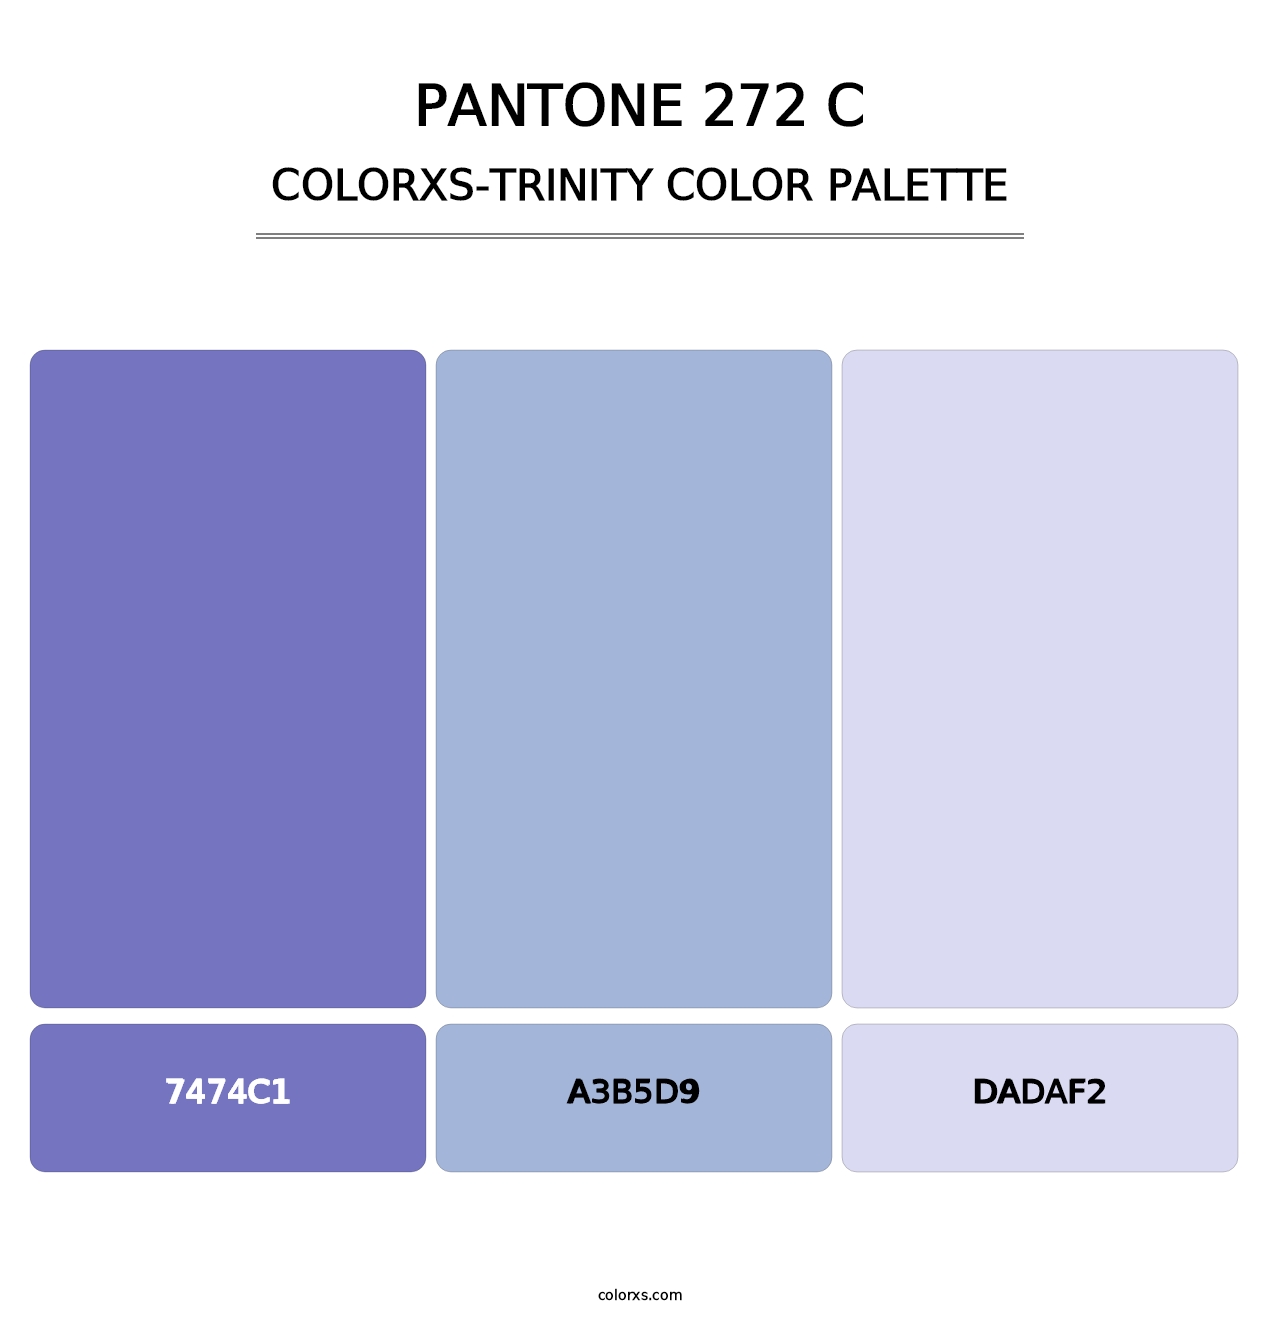 PANTONE 272 C - Colorxs Trinity Palette